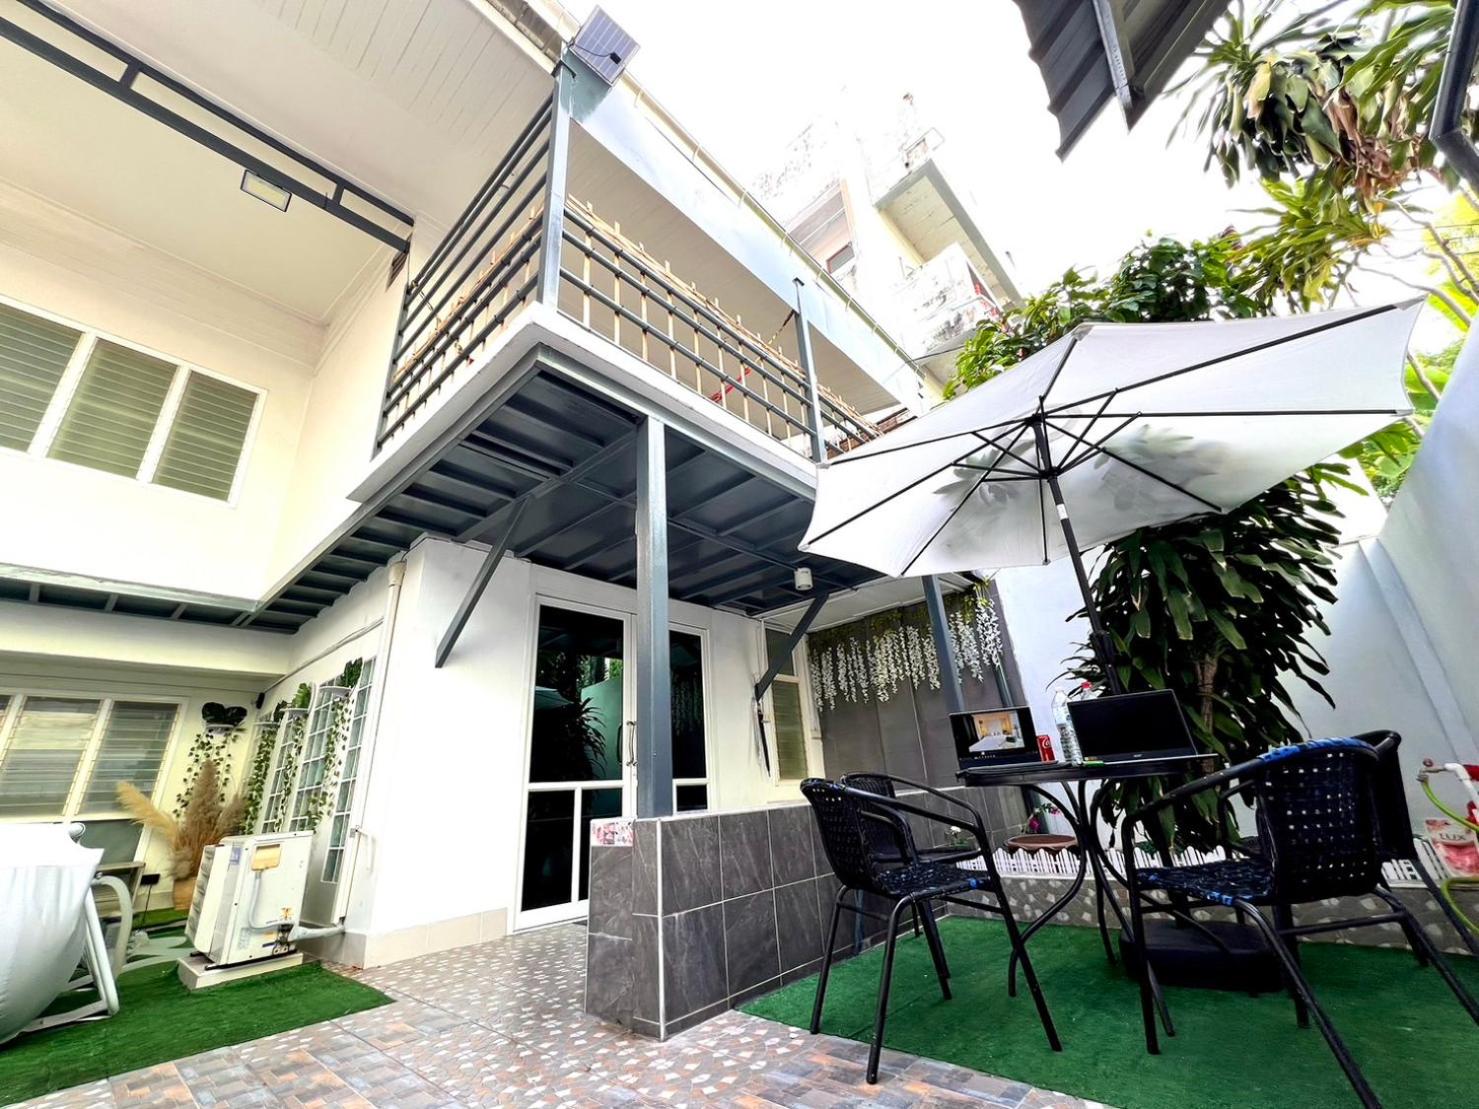 Getaway Villa Bangkok - 4 Bedroom,6 Beds and 5 Bathroom, Huai Kwang